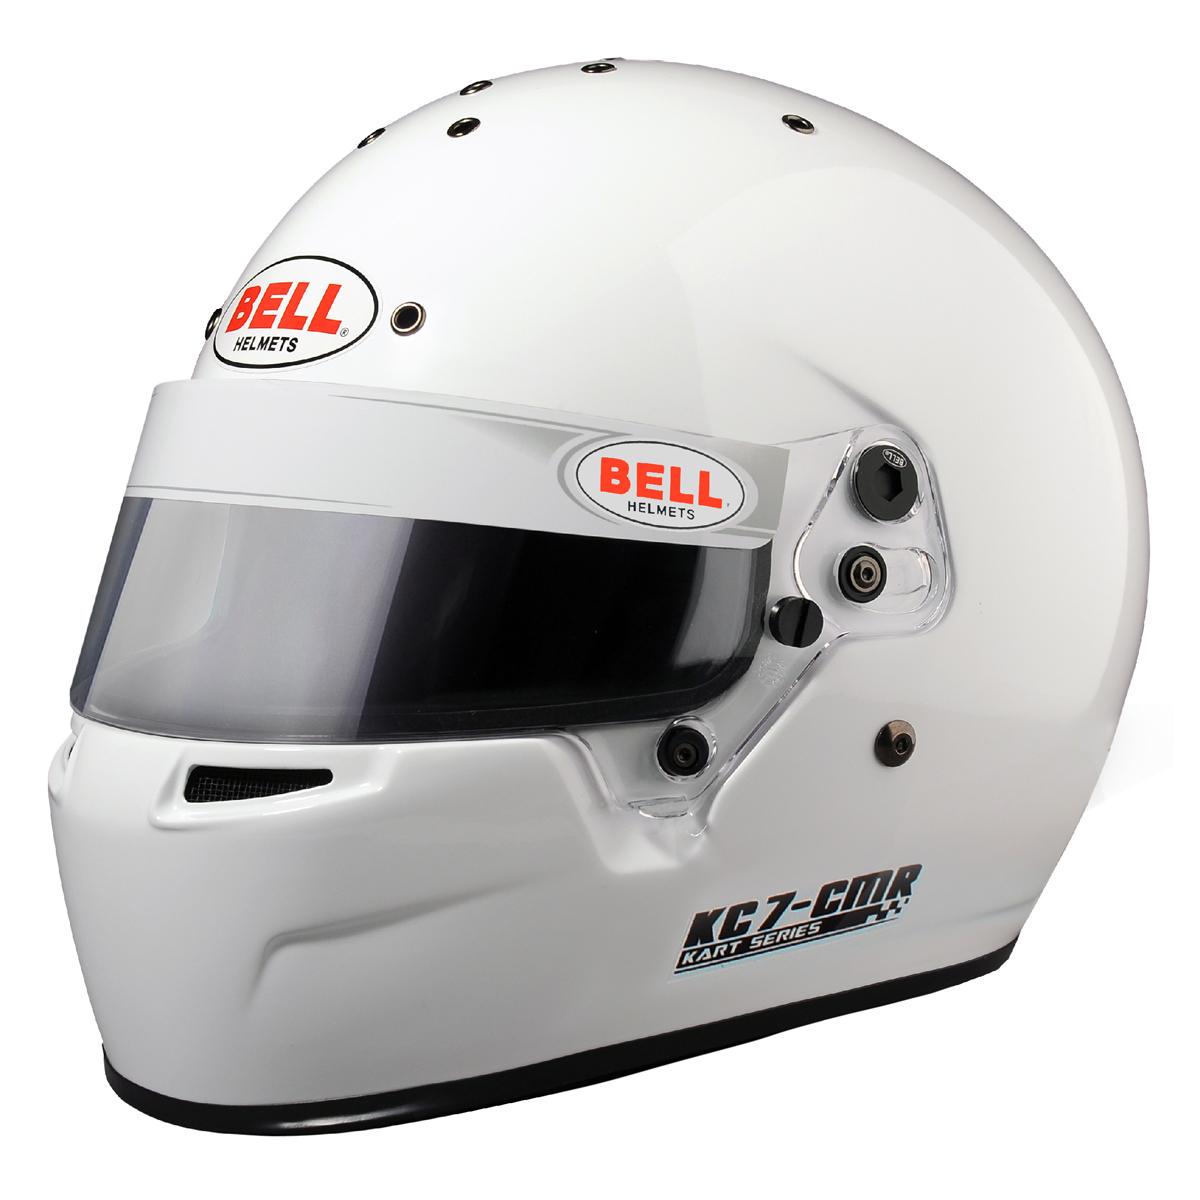 BELL 1311007 Karting helmet KC7-CMR (CIK, CMR2016), white, size 58 Photo-0 